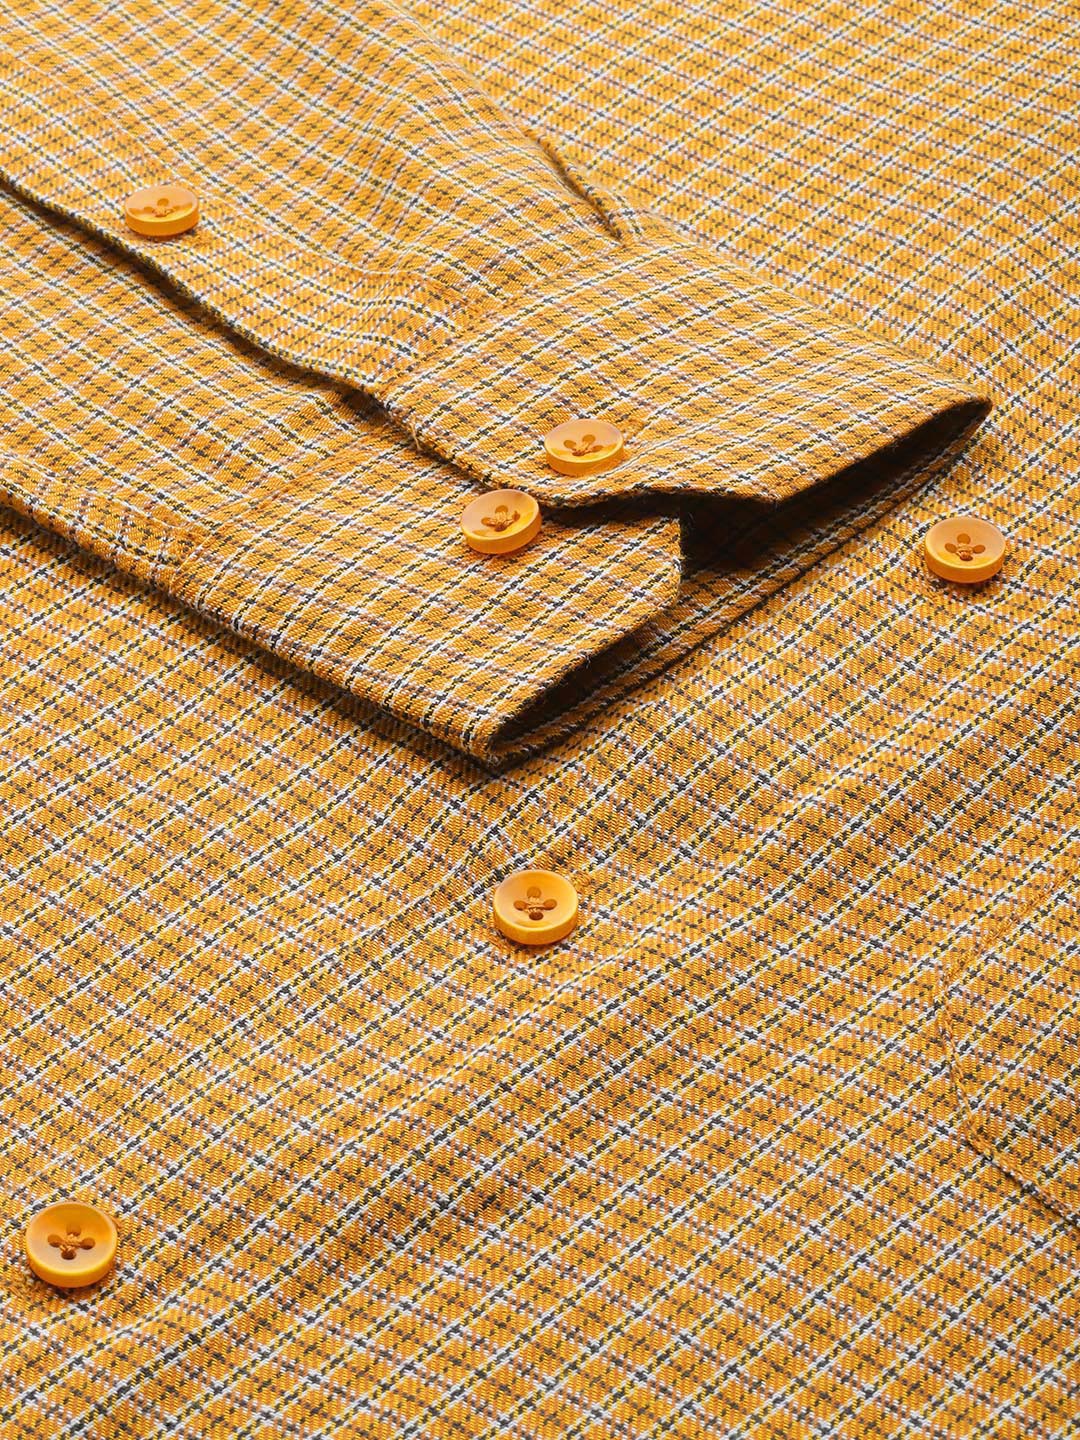 Men's Cotton Checked Formal Shirts ( SF 804Mustard ) - Jainish